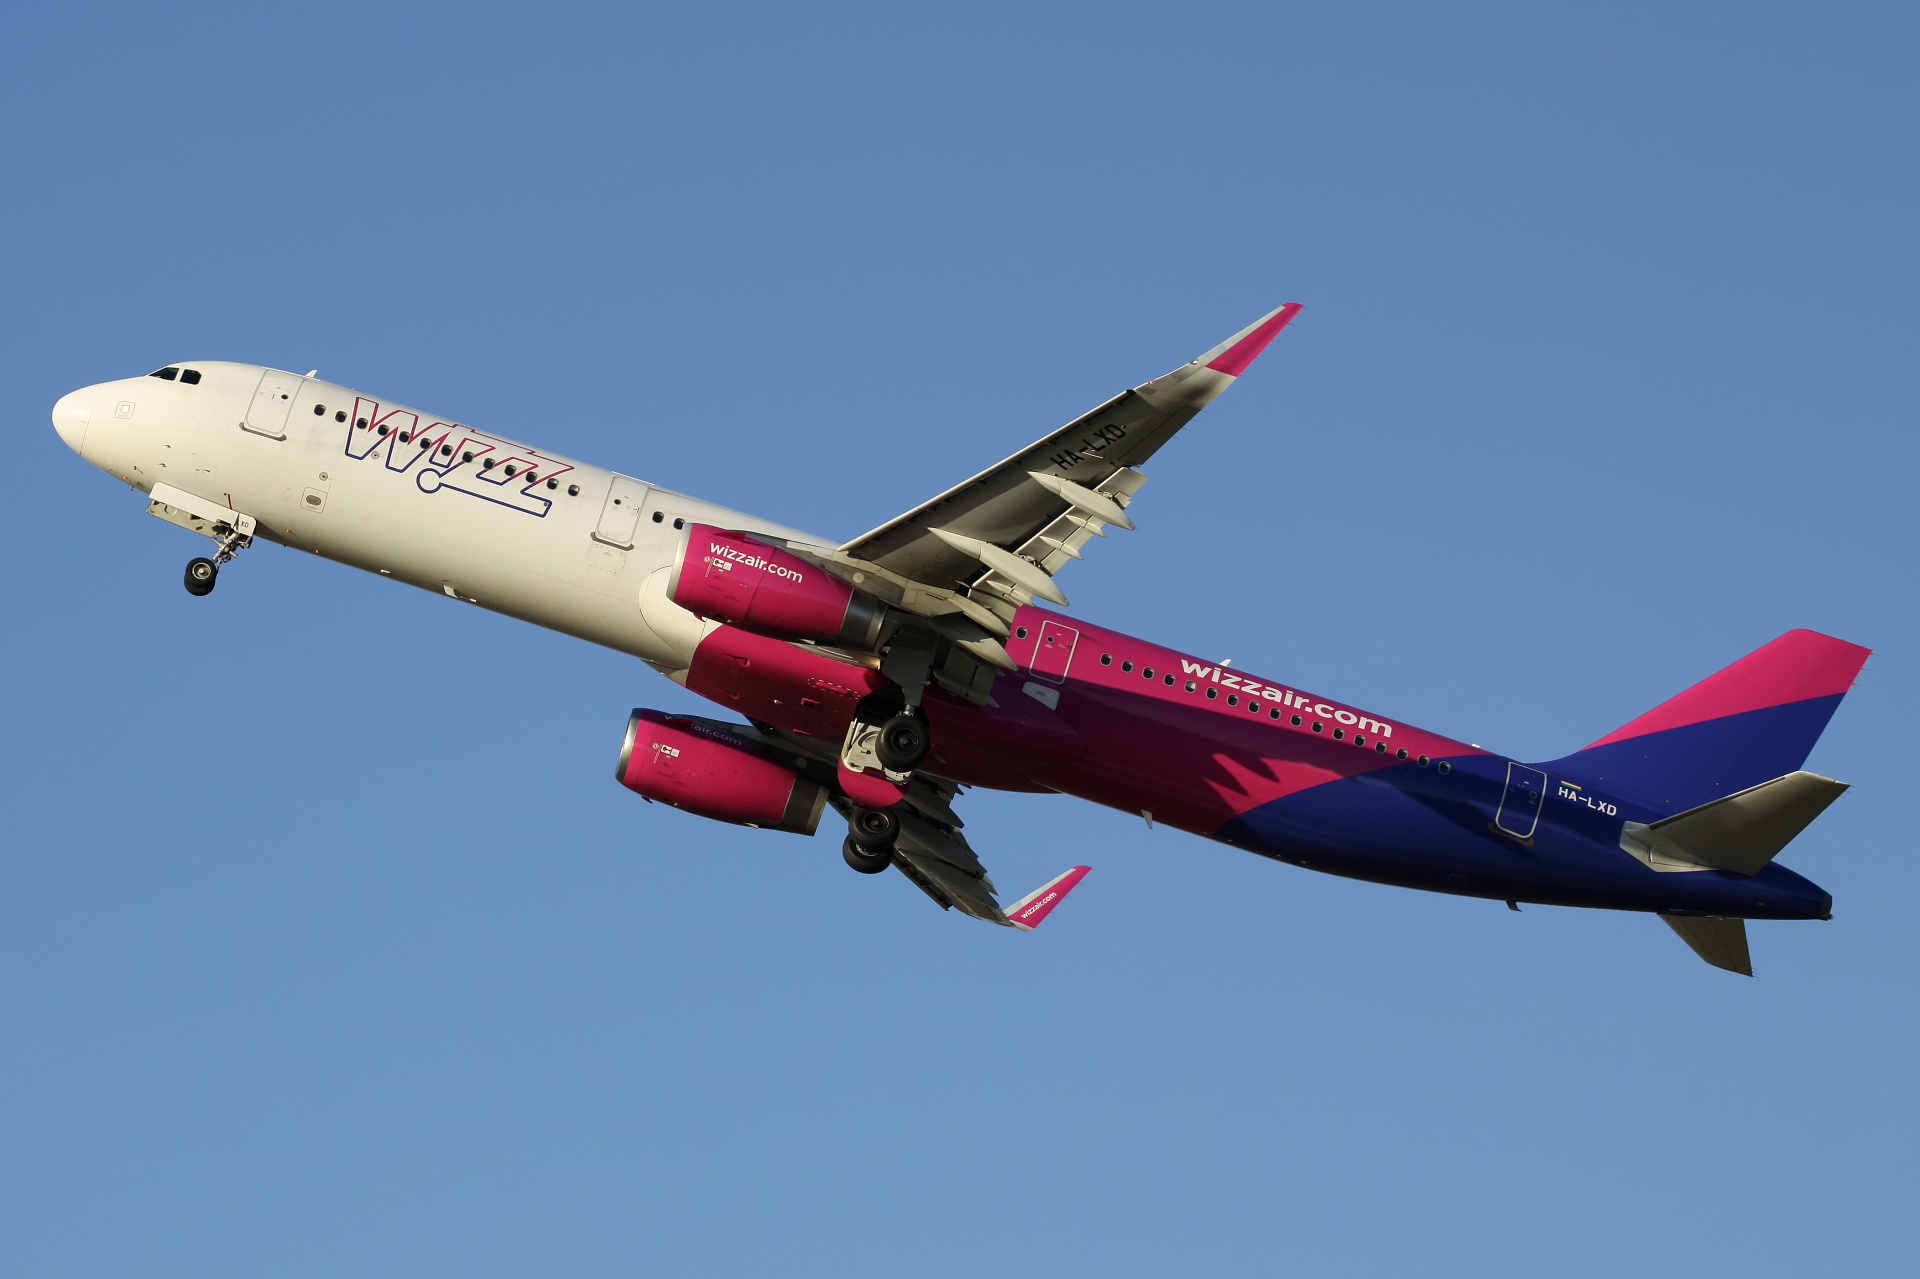 HA-LXD (Aircraft » EPWA Spotting » Airbus A321-200 » Wizz Air)